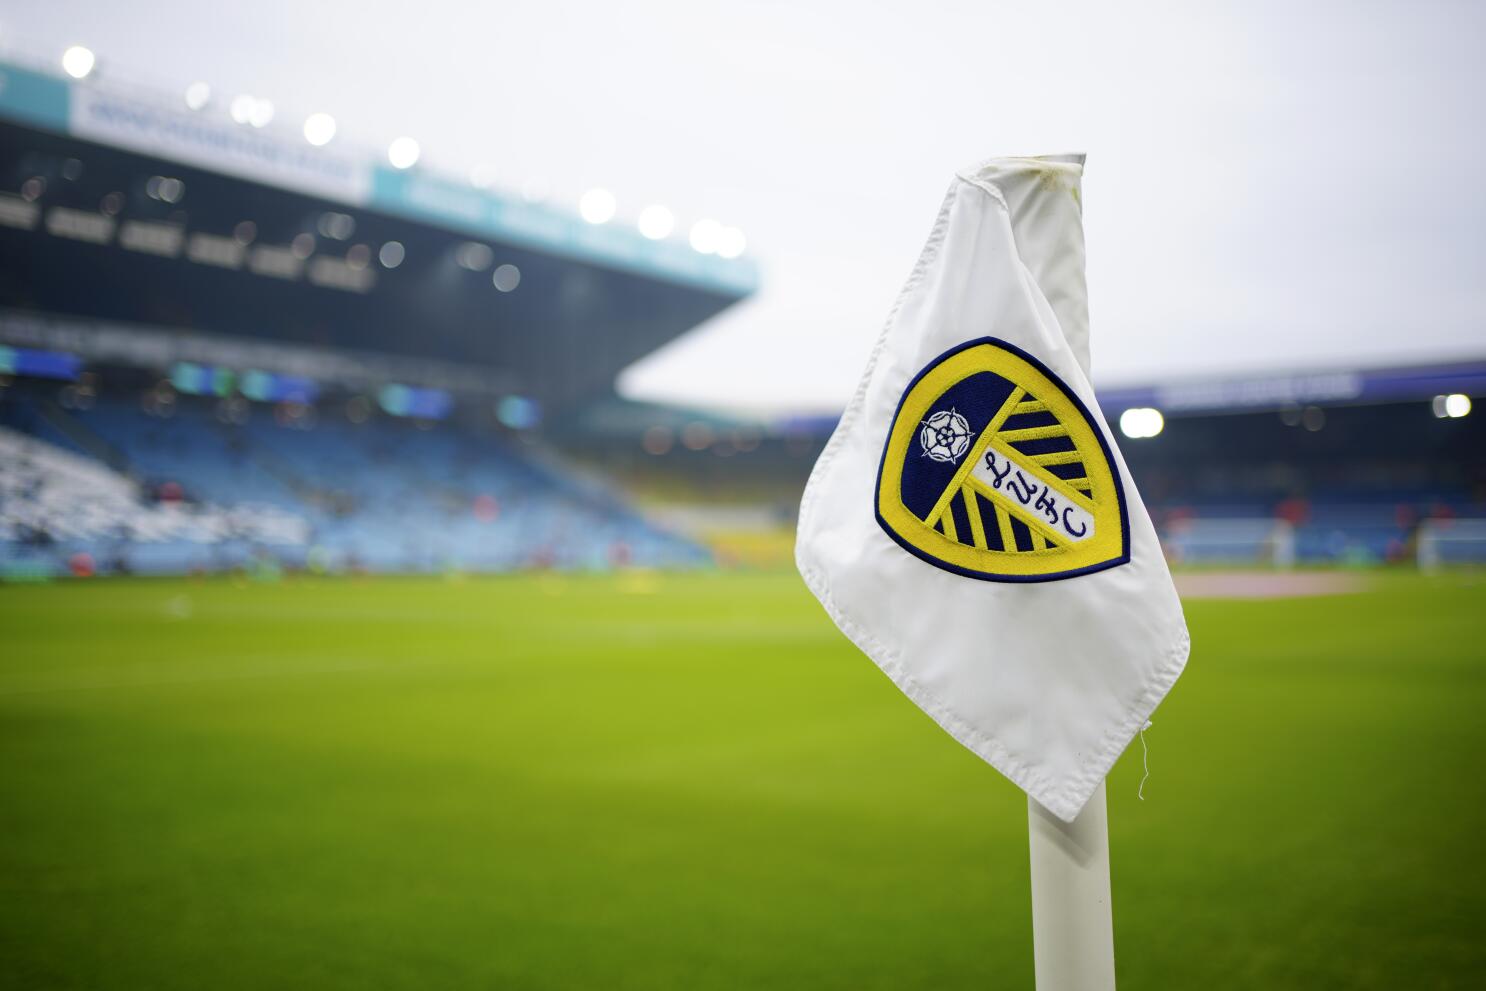 Leeds removes director of football amid Allardyce reports - The San